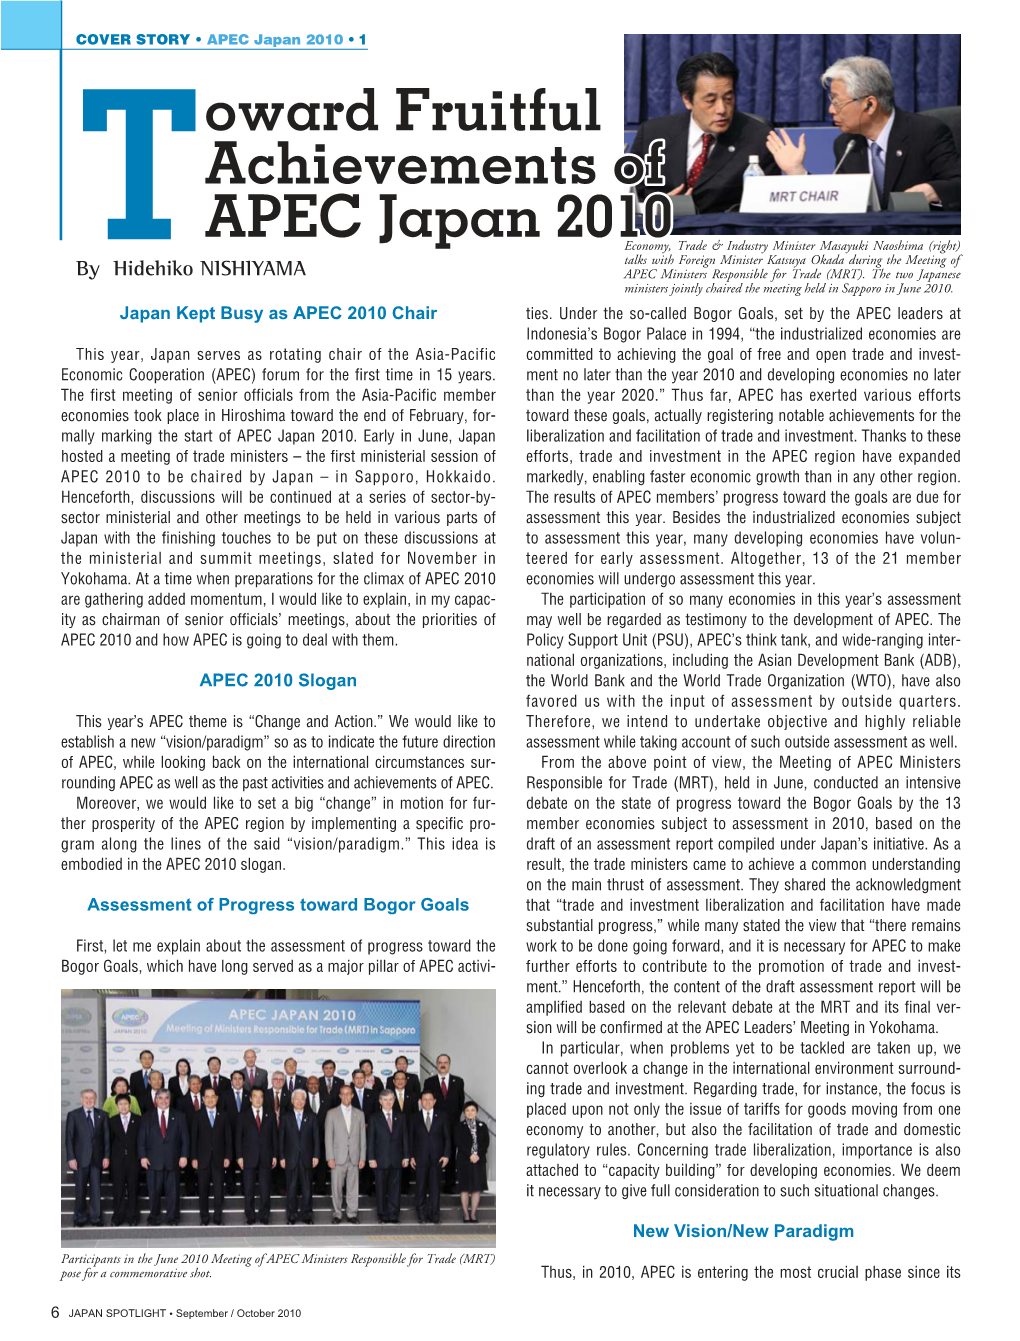 By Hidehiko NISHIYAMA APEC Ministers Responsible for Trade (MRT)